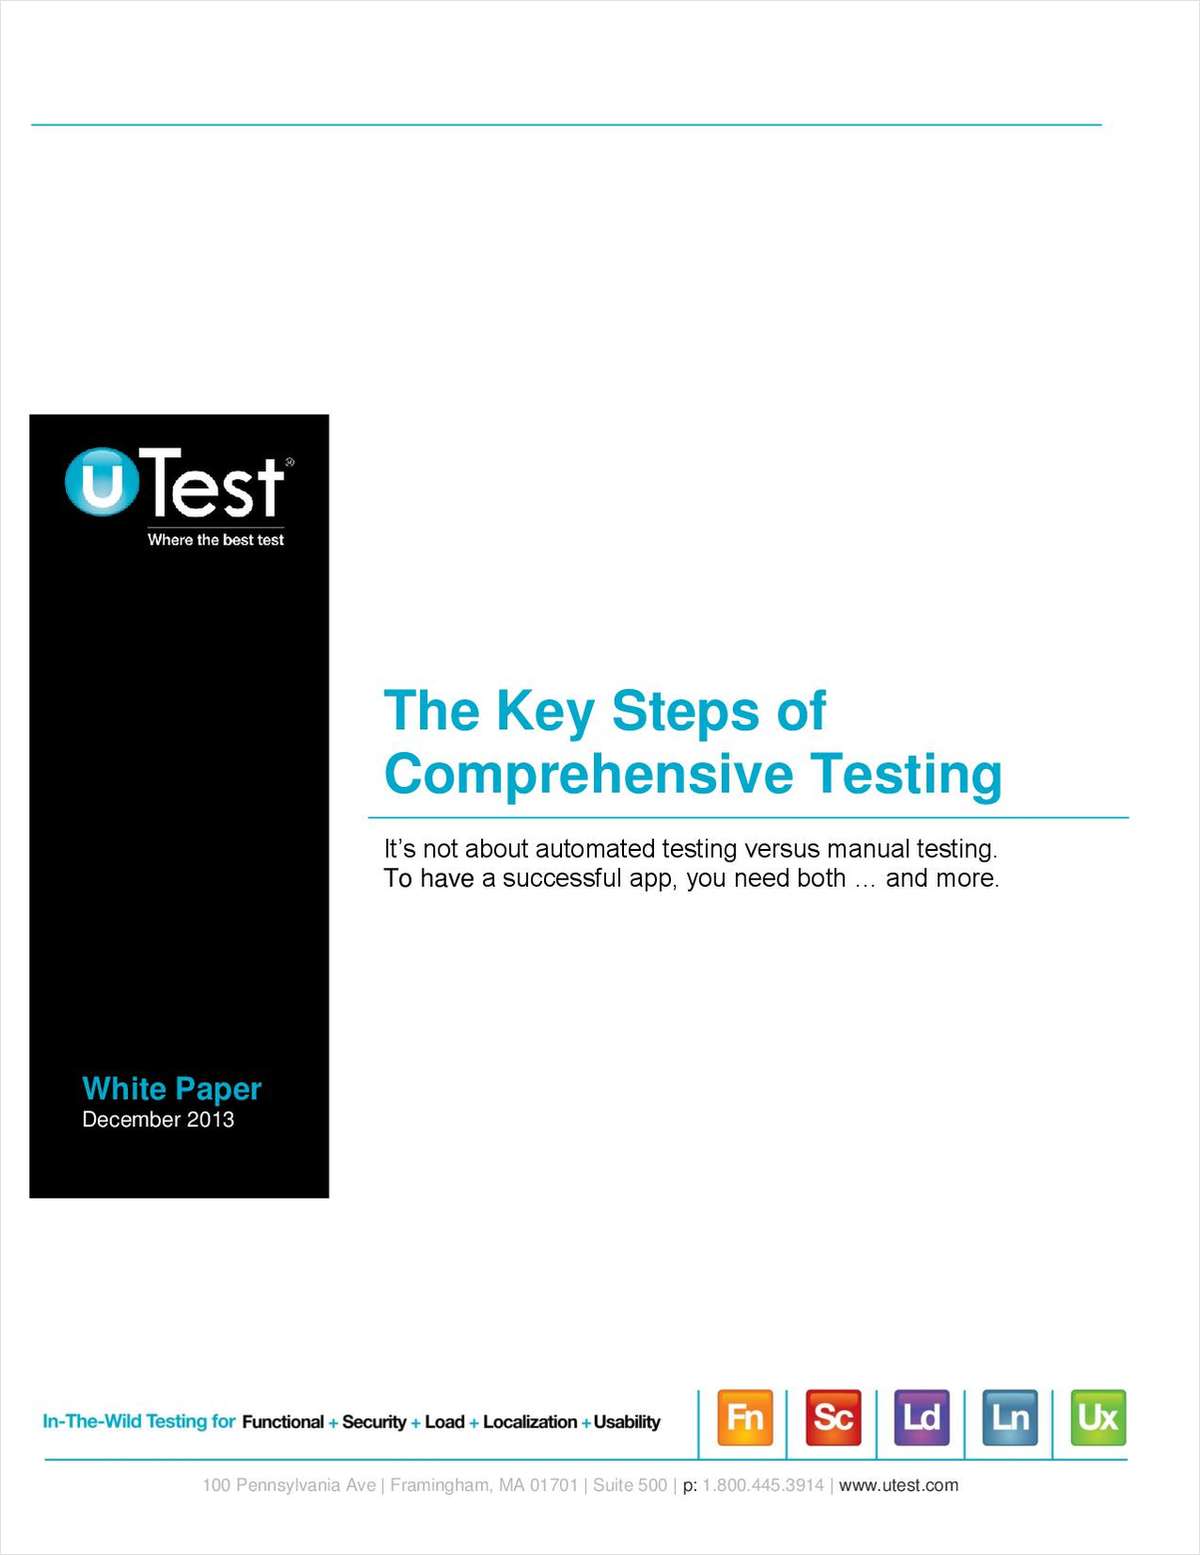 The Key Steps of Comprehensive Testing